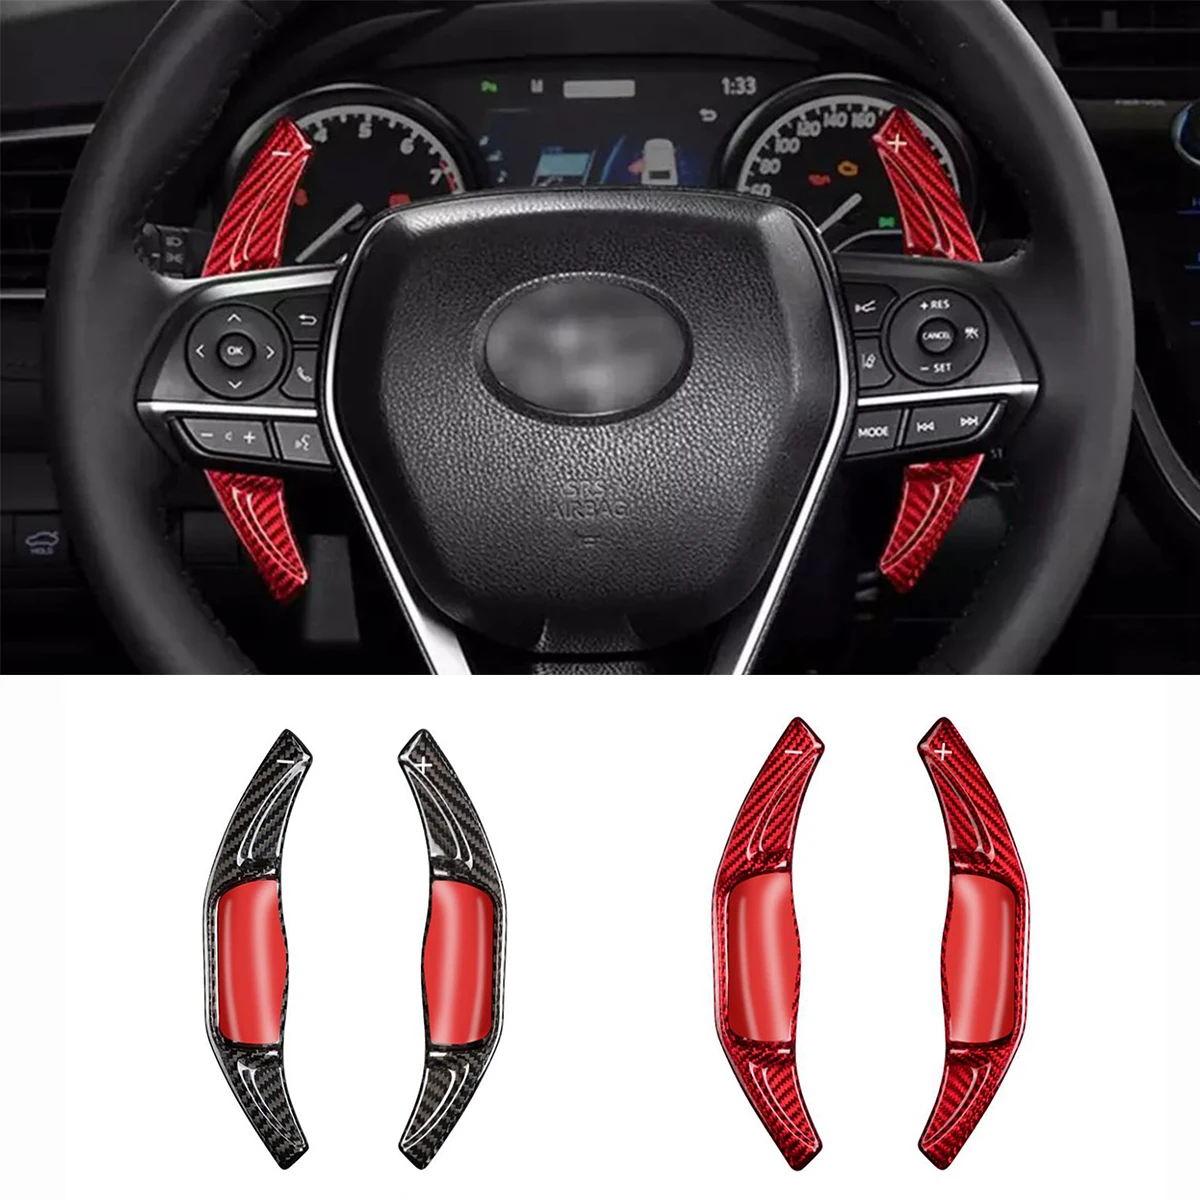 

2Pcs Real Carbon Fiber Car Steering Wheel Shift Paddle For Toyota Camry Corolla Avalon Levin RAV4 2018 2019 2020